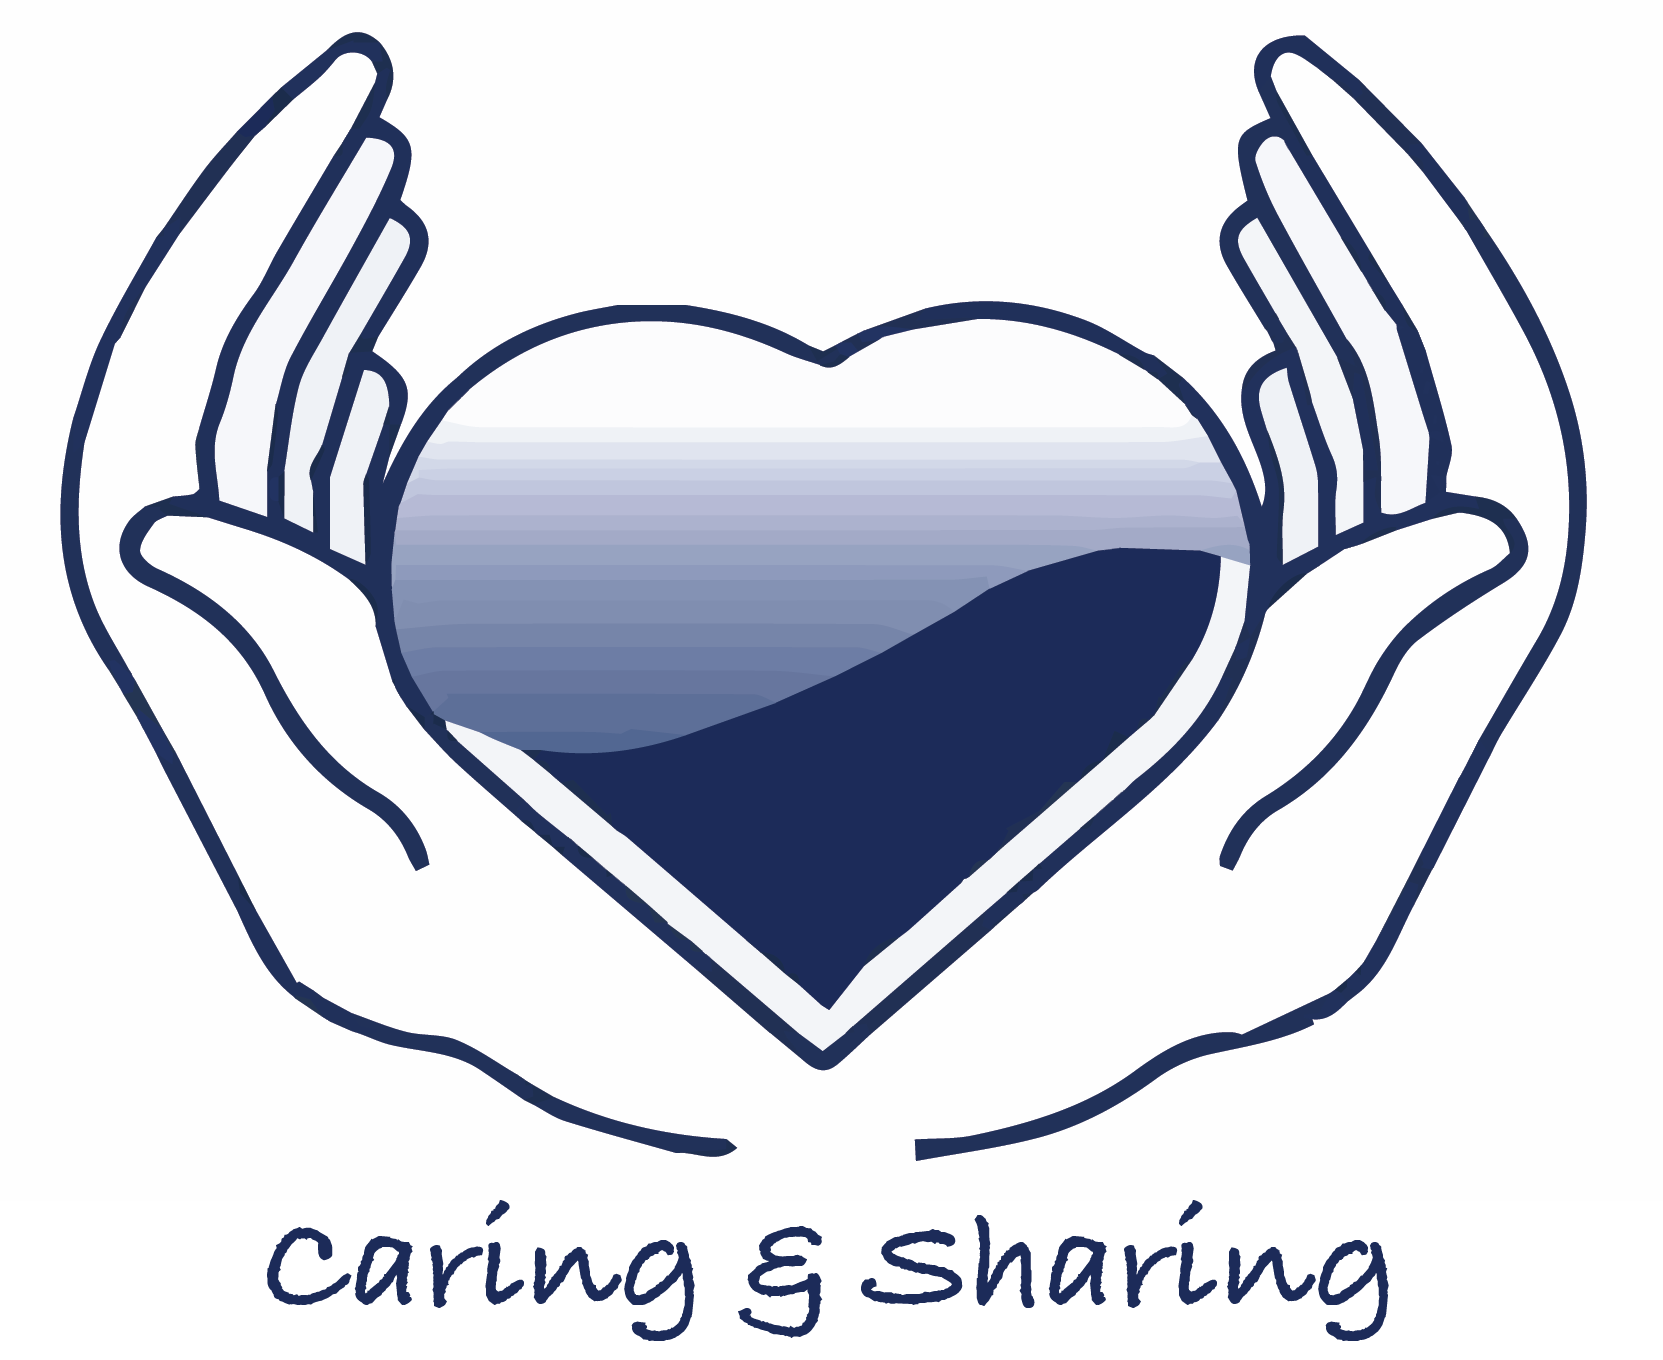 Community Caring & Sharing